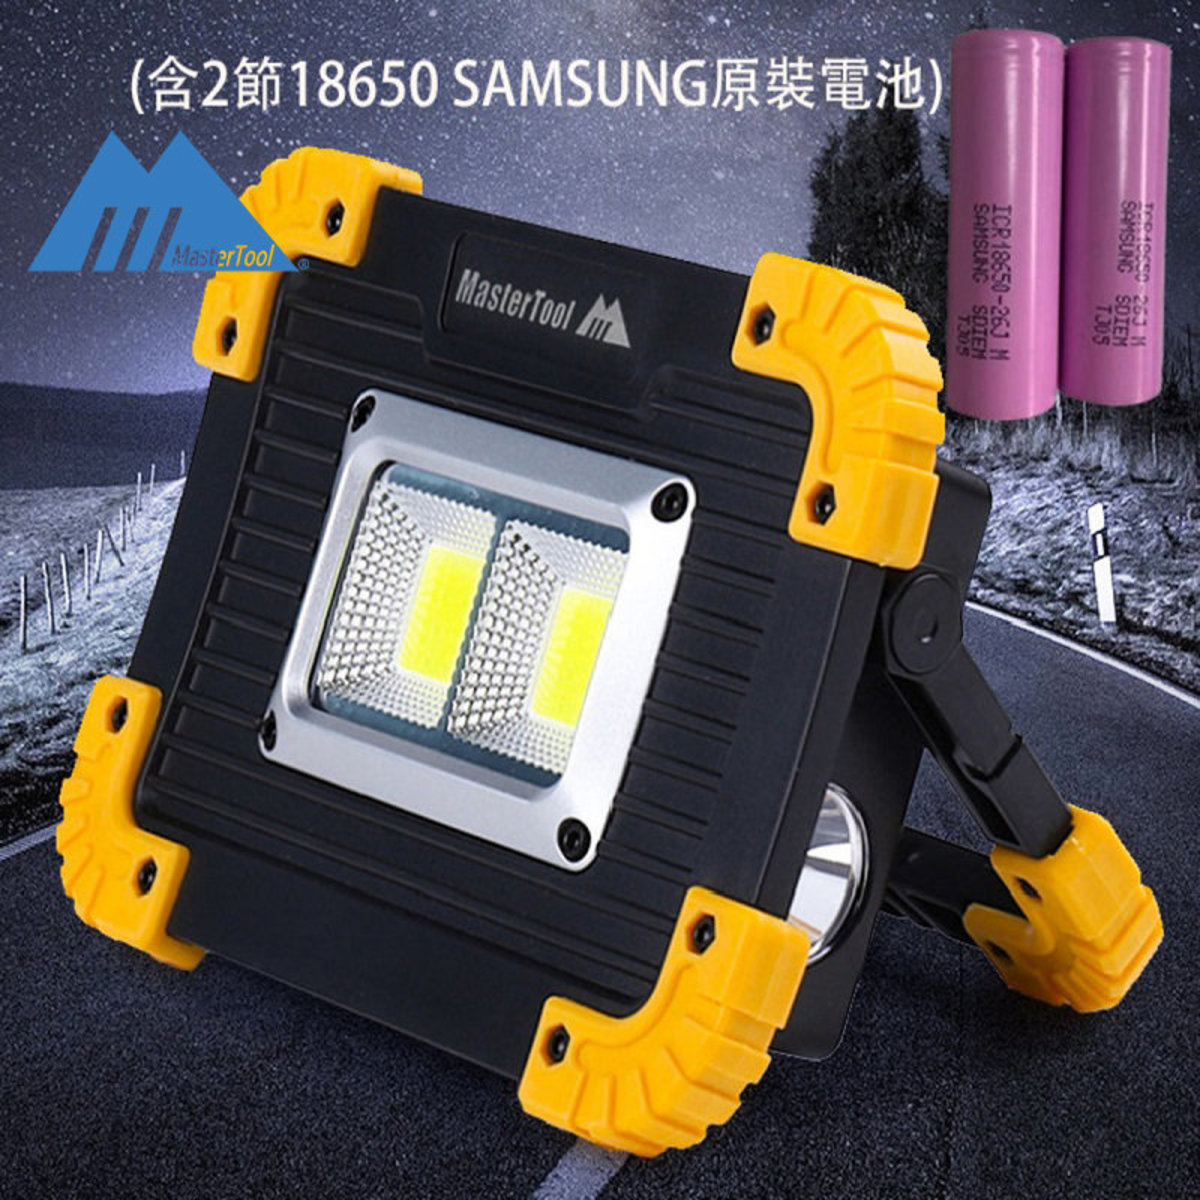 MasterTool - COB Work Light, Power Bank with 5200mAh Samsung Lithium Batteries